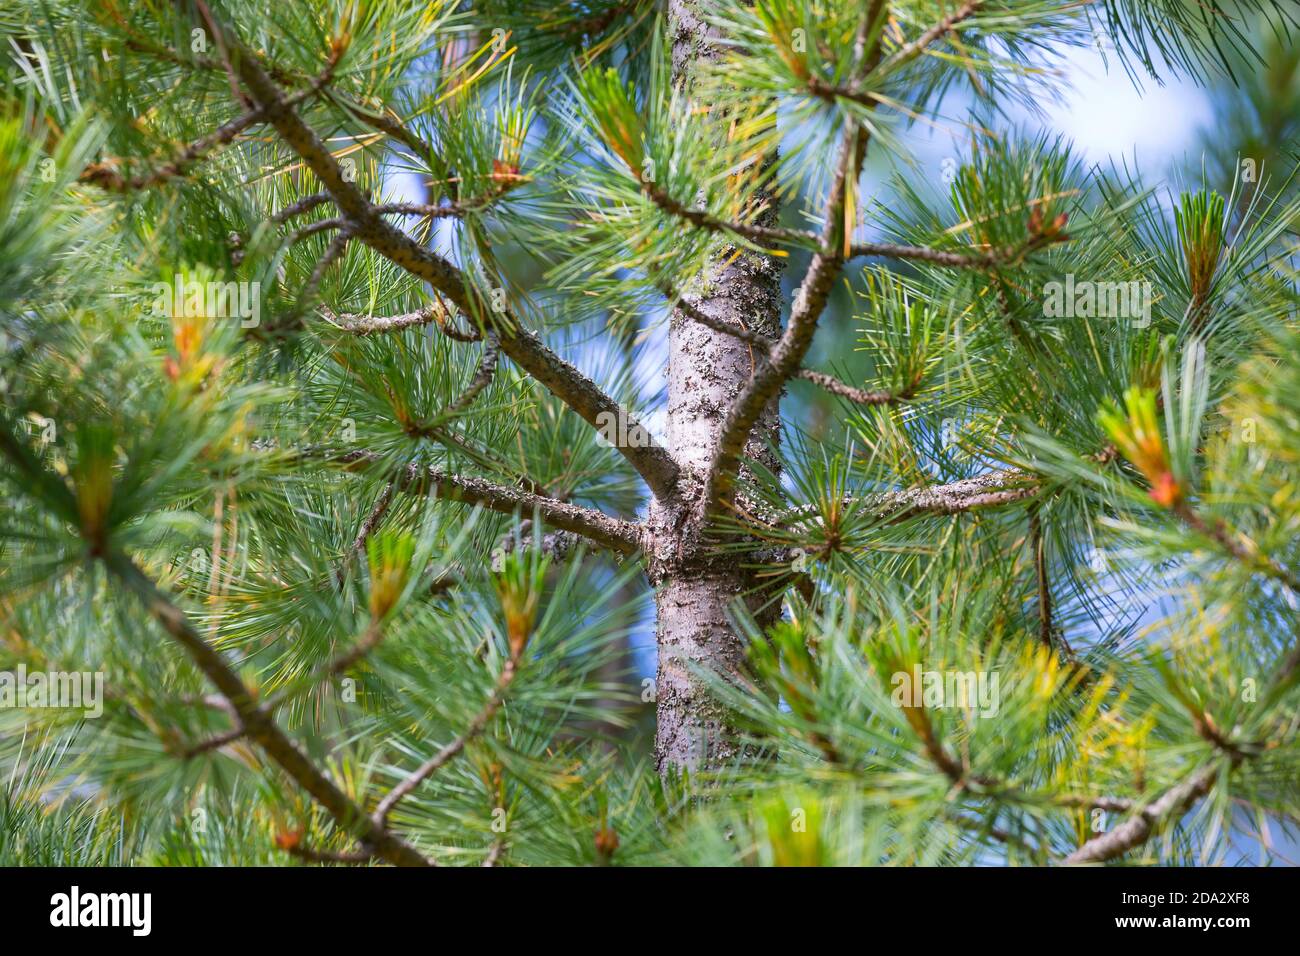 Swiss stone pine, arolla pine (Pinus cembra), branches, Germany Stock Photo